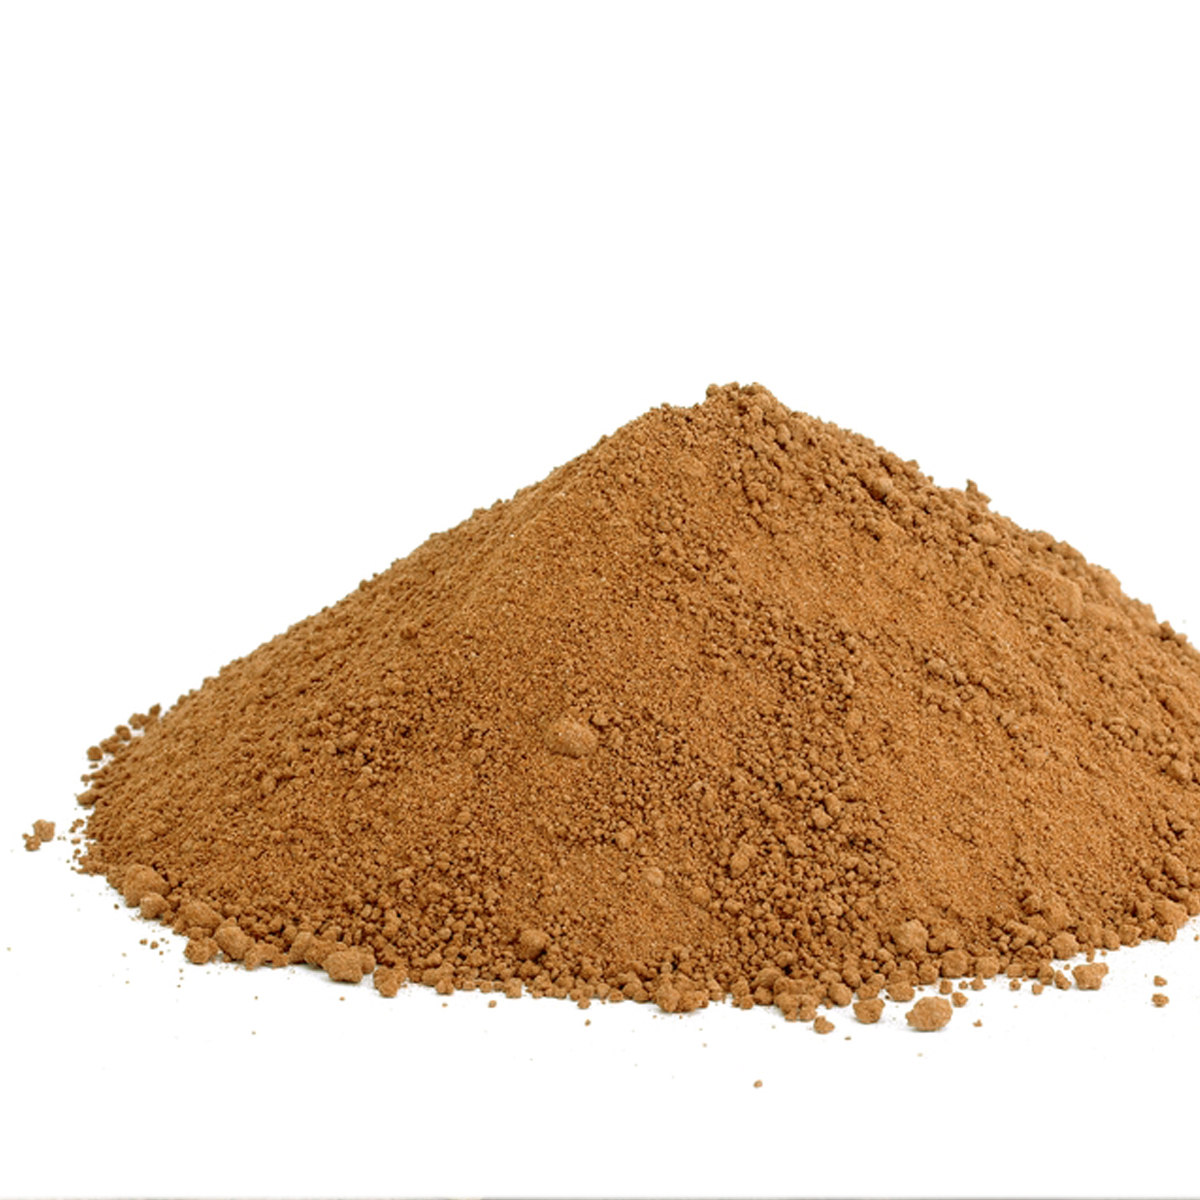 a close up view of a mound of tamari powder